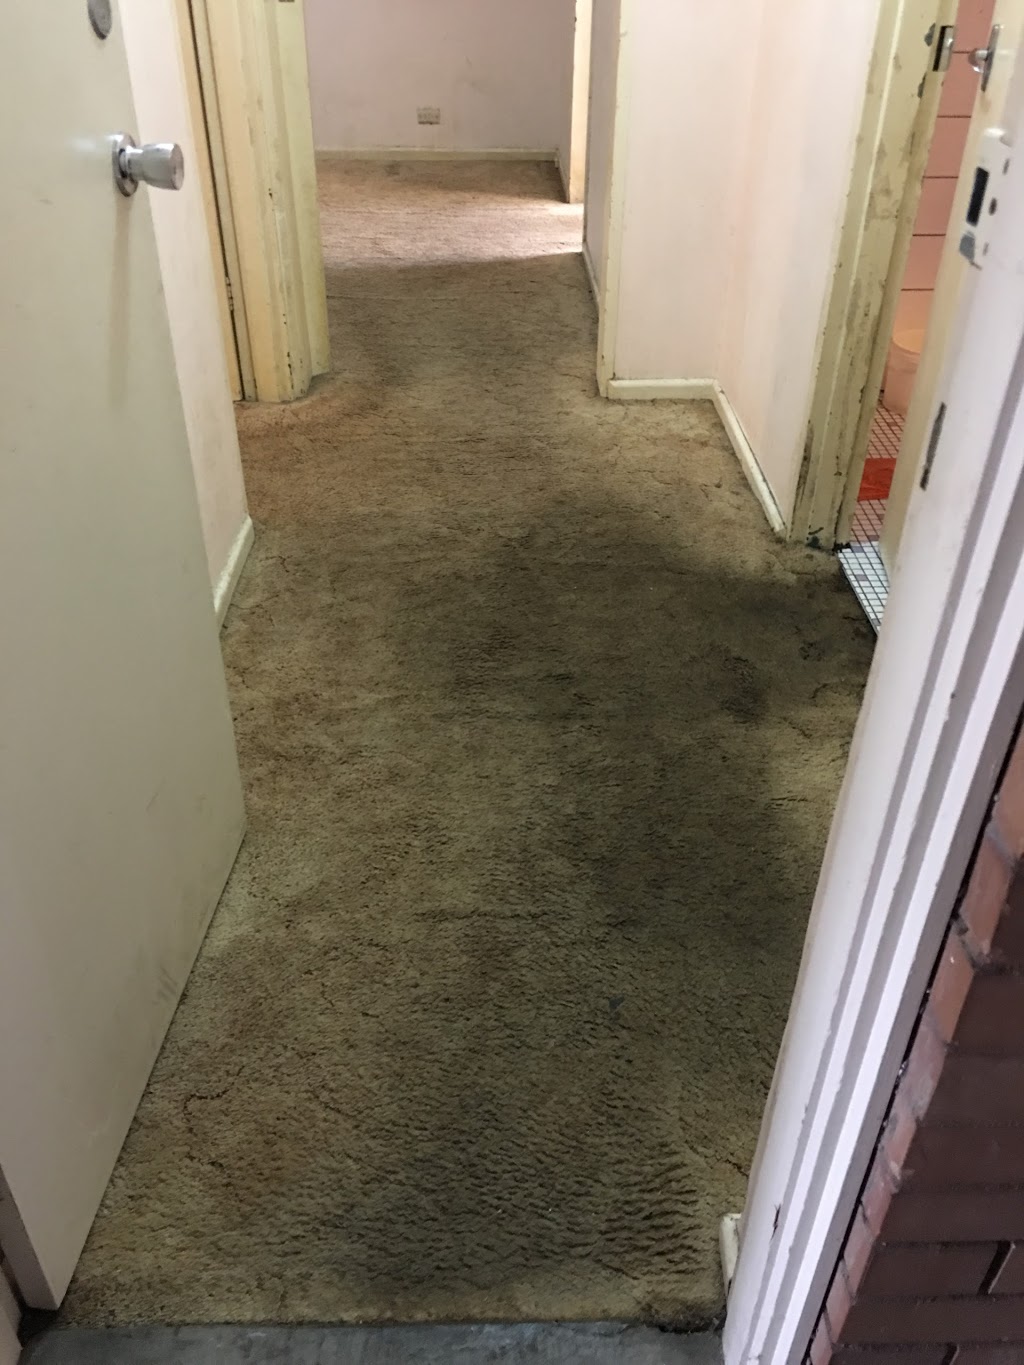 Melbourne Bond & Carpet Cleaning | Melbourne Bond & Carpet Cleaning, 29 York St, Glen Waverley VIC 3150, Australia | Phone: 0433 090 031